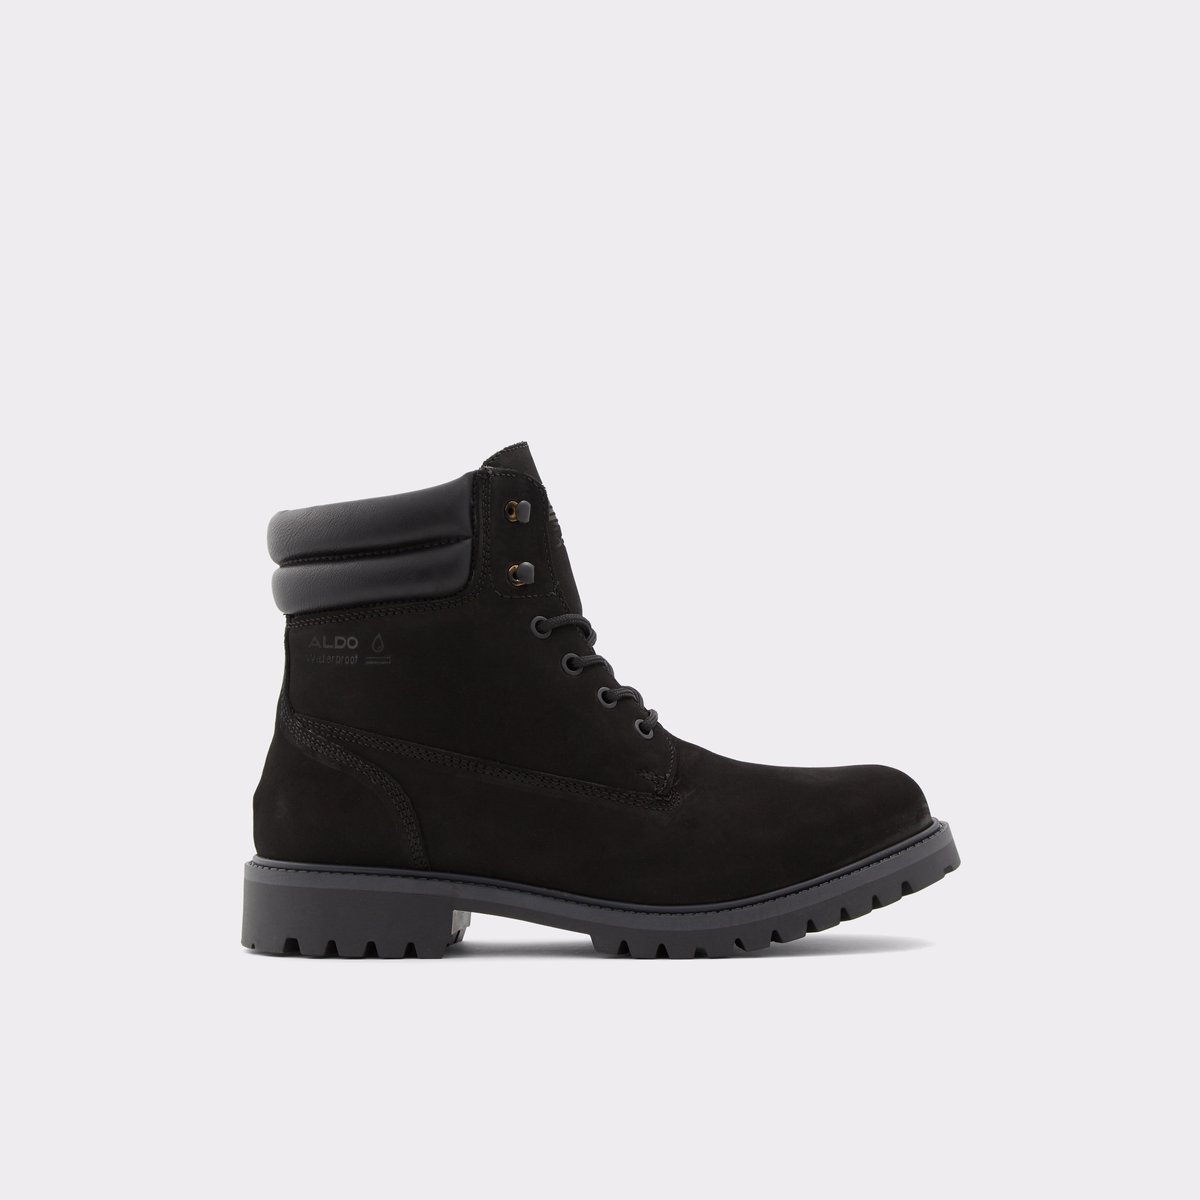 Agroredda Black Men's Waterproof boots 